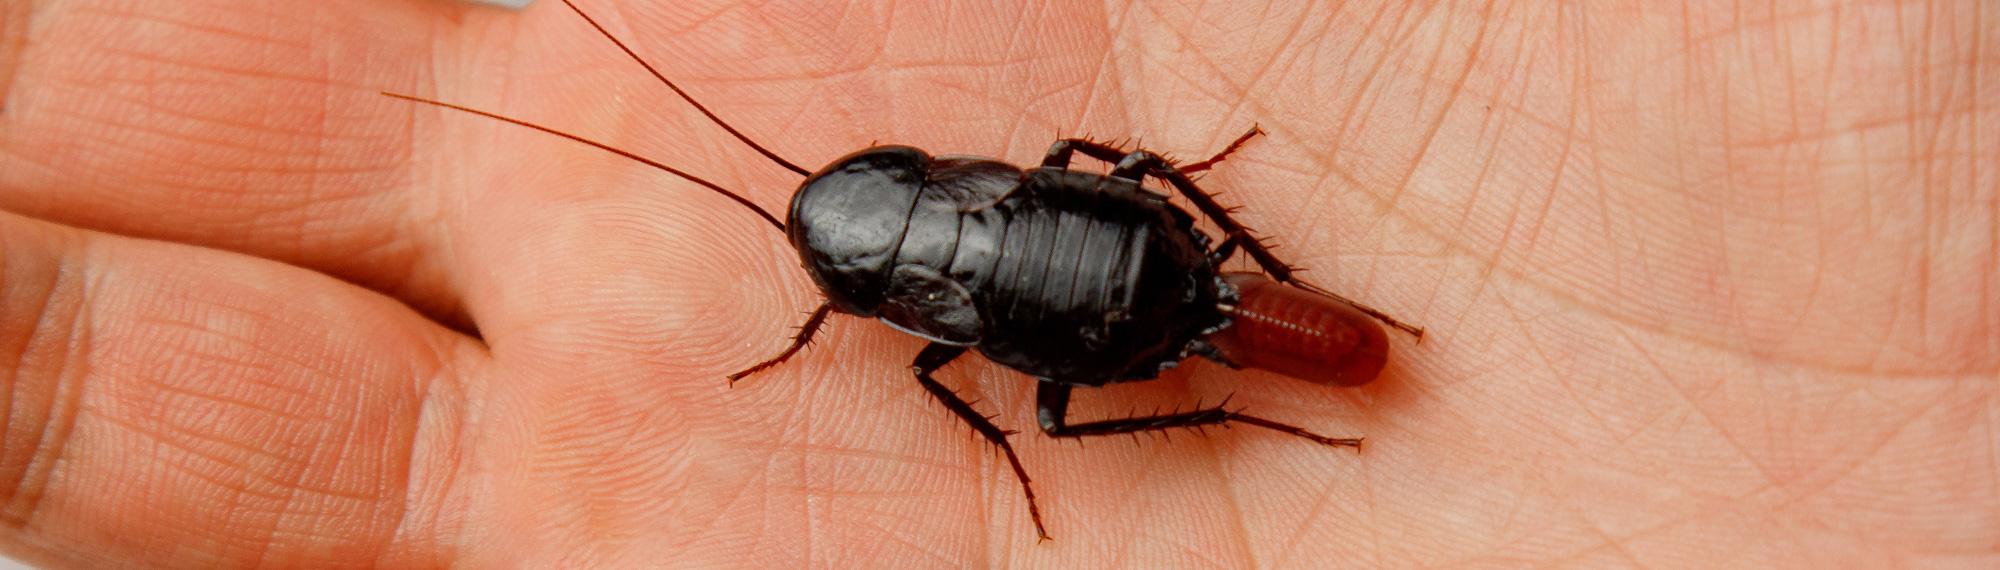 oriental cockroach in hand